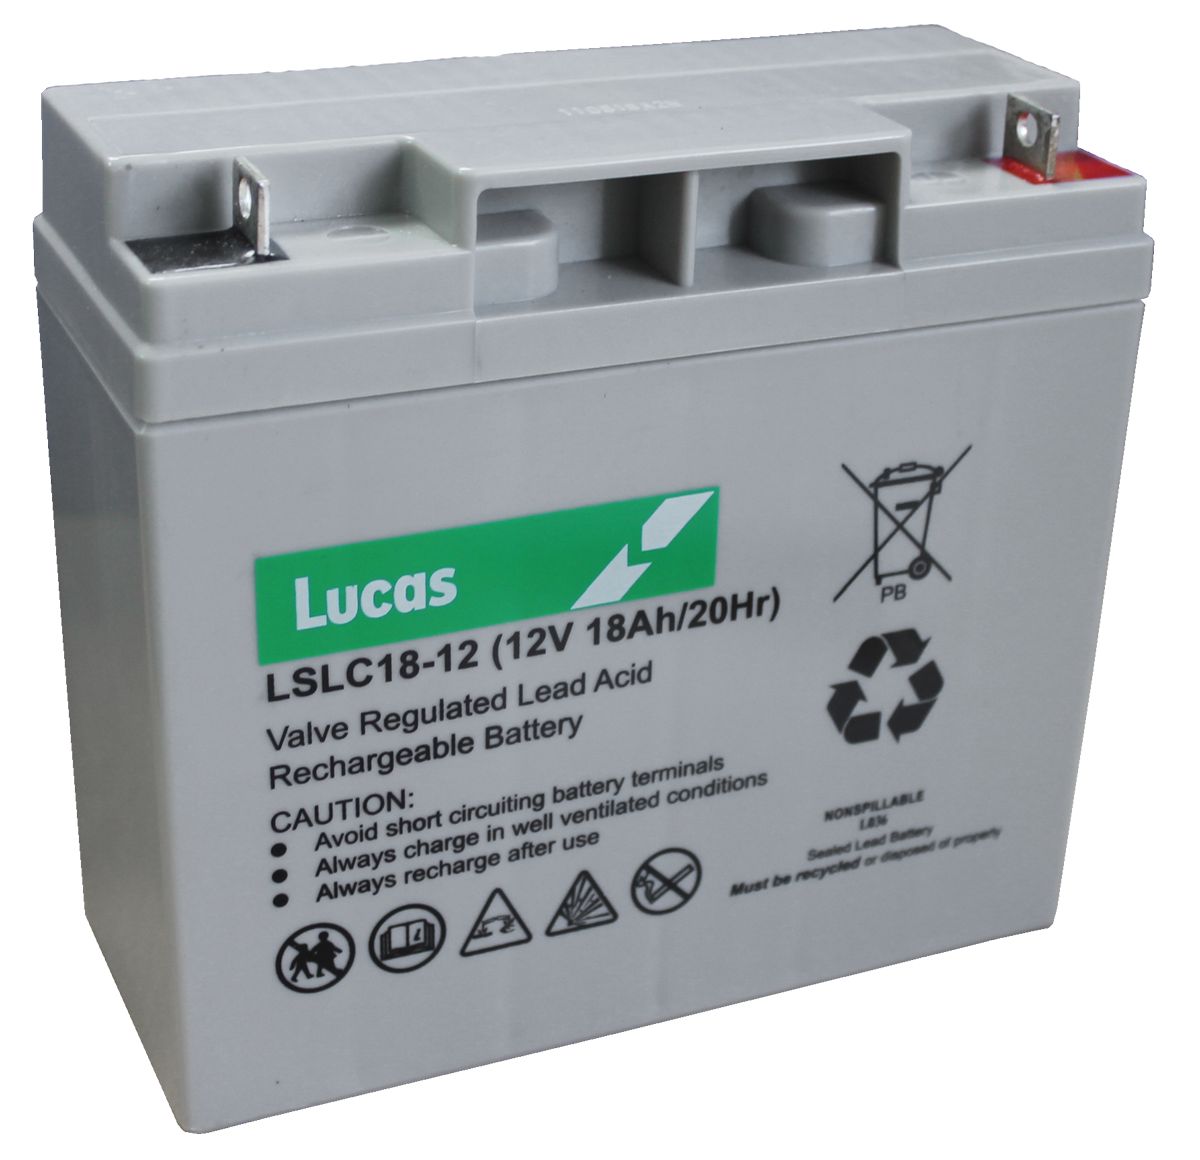 Lucas 12V 18Ah Cyclic battery